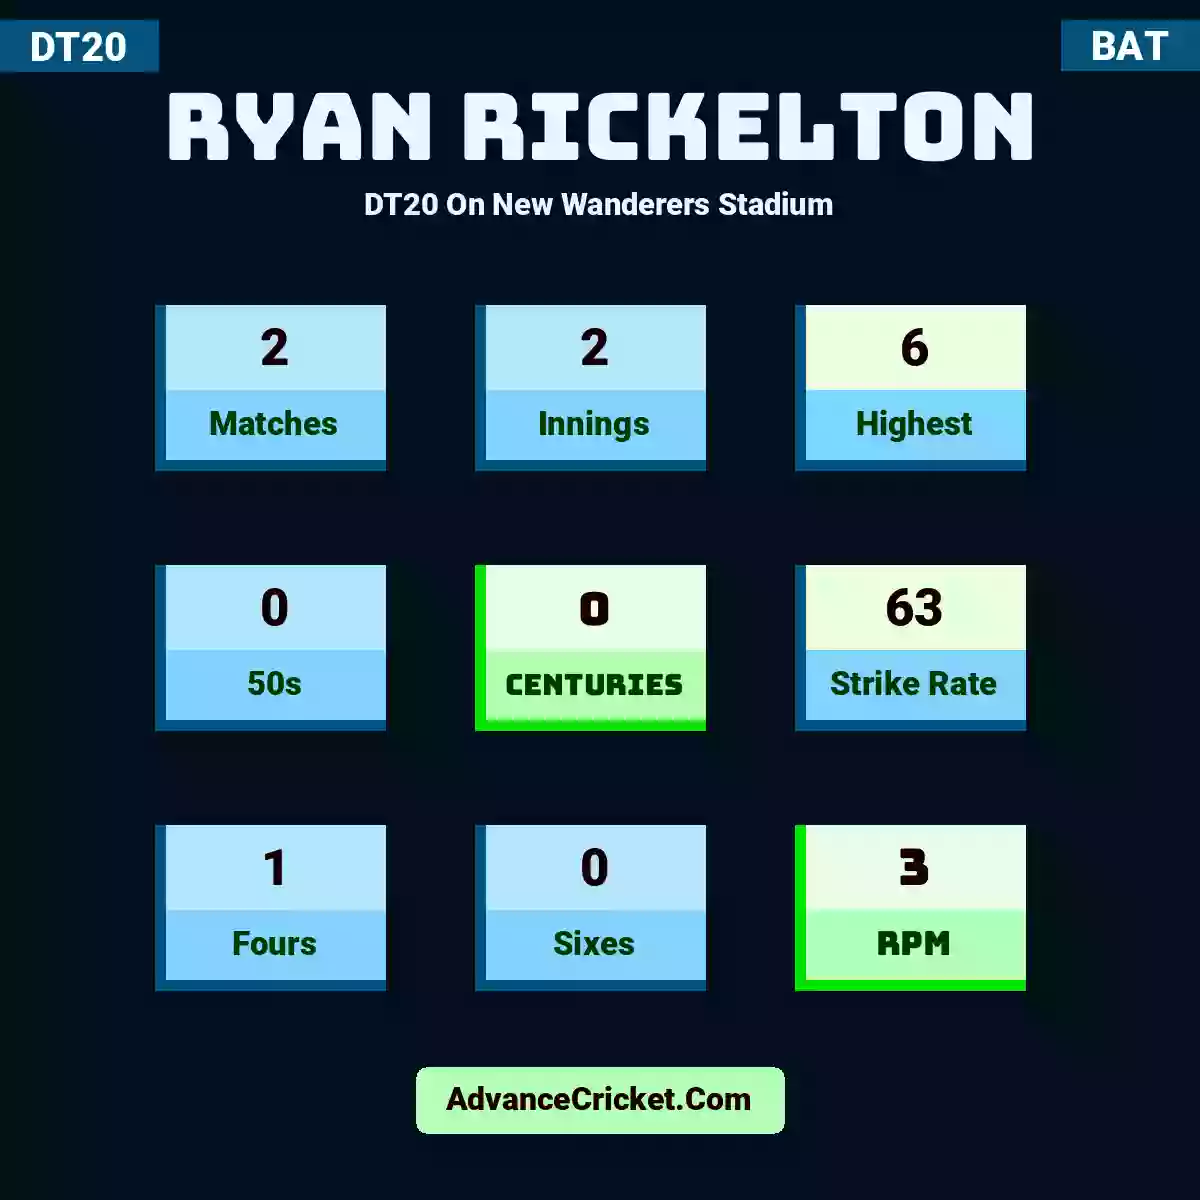 Ryan Rickelton DT20  On New Wanderers Stadium, Ryan Rickelton played 2 matches, scored 6 runs as highest, 0 half-centuries, and 0 centuries, with a strike rate of 63. R.Rickelton hit 1 fours and 0 sixes, with an RPM of 3.